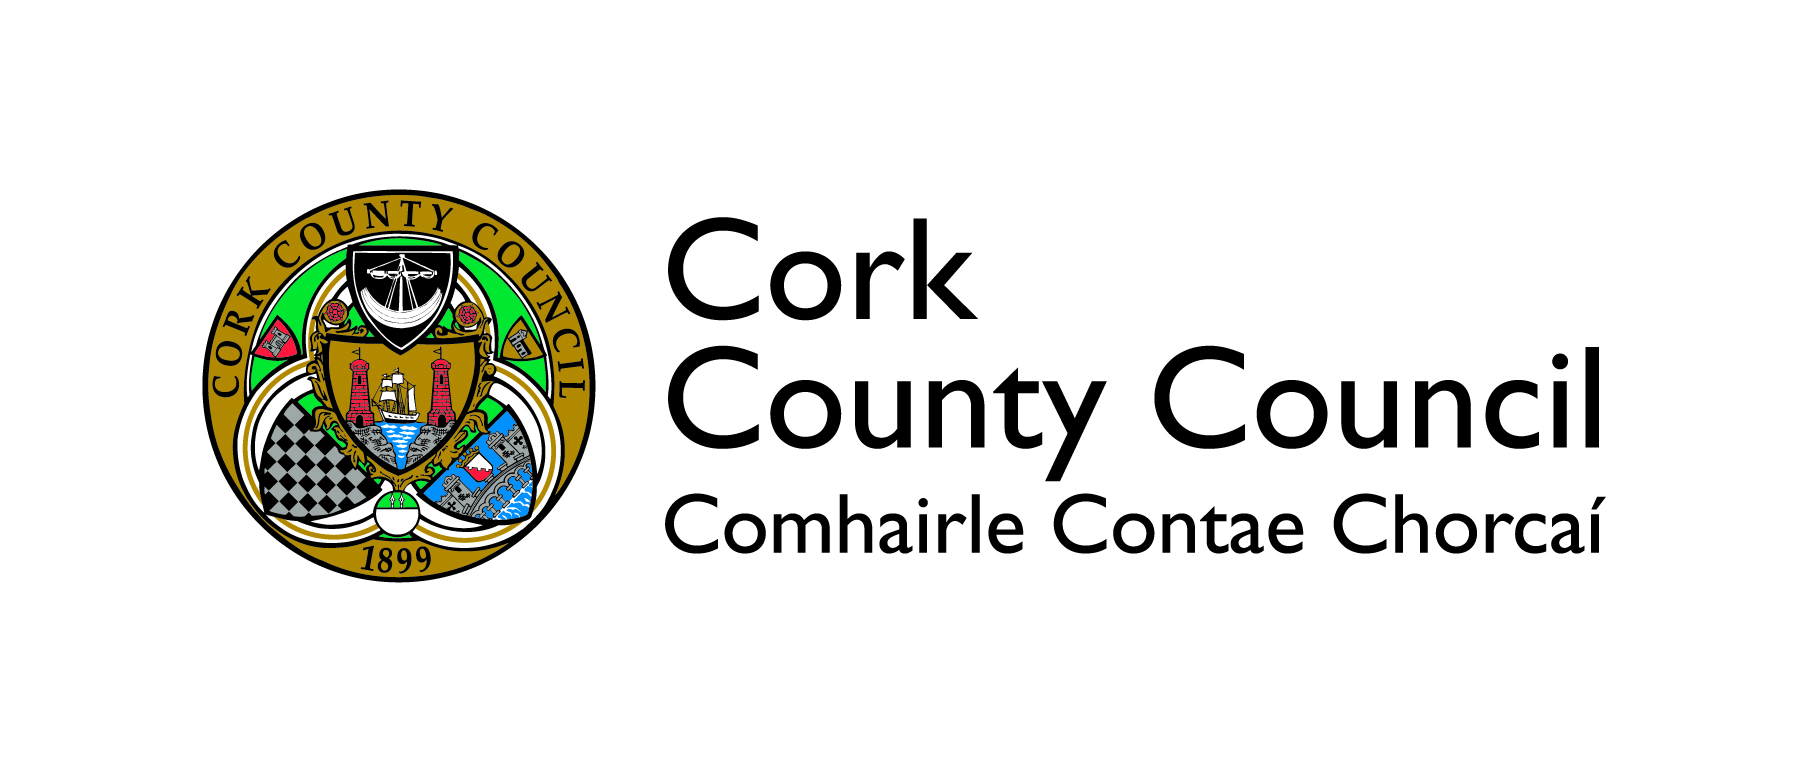 Cork County Council invites arts & cultural proposals as part of its Creative Communities Scheme 2018